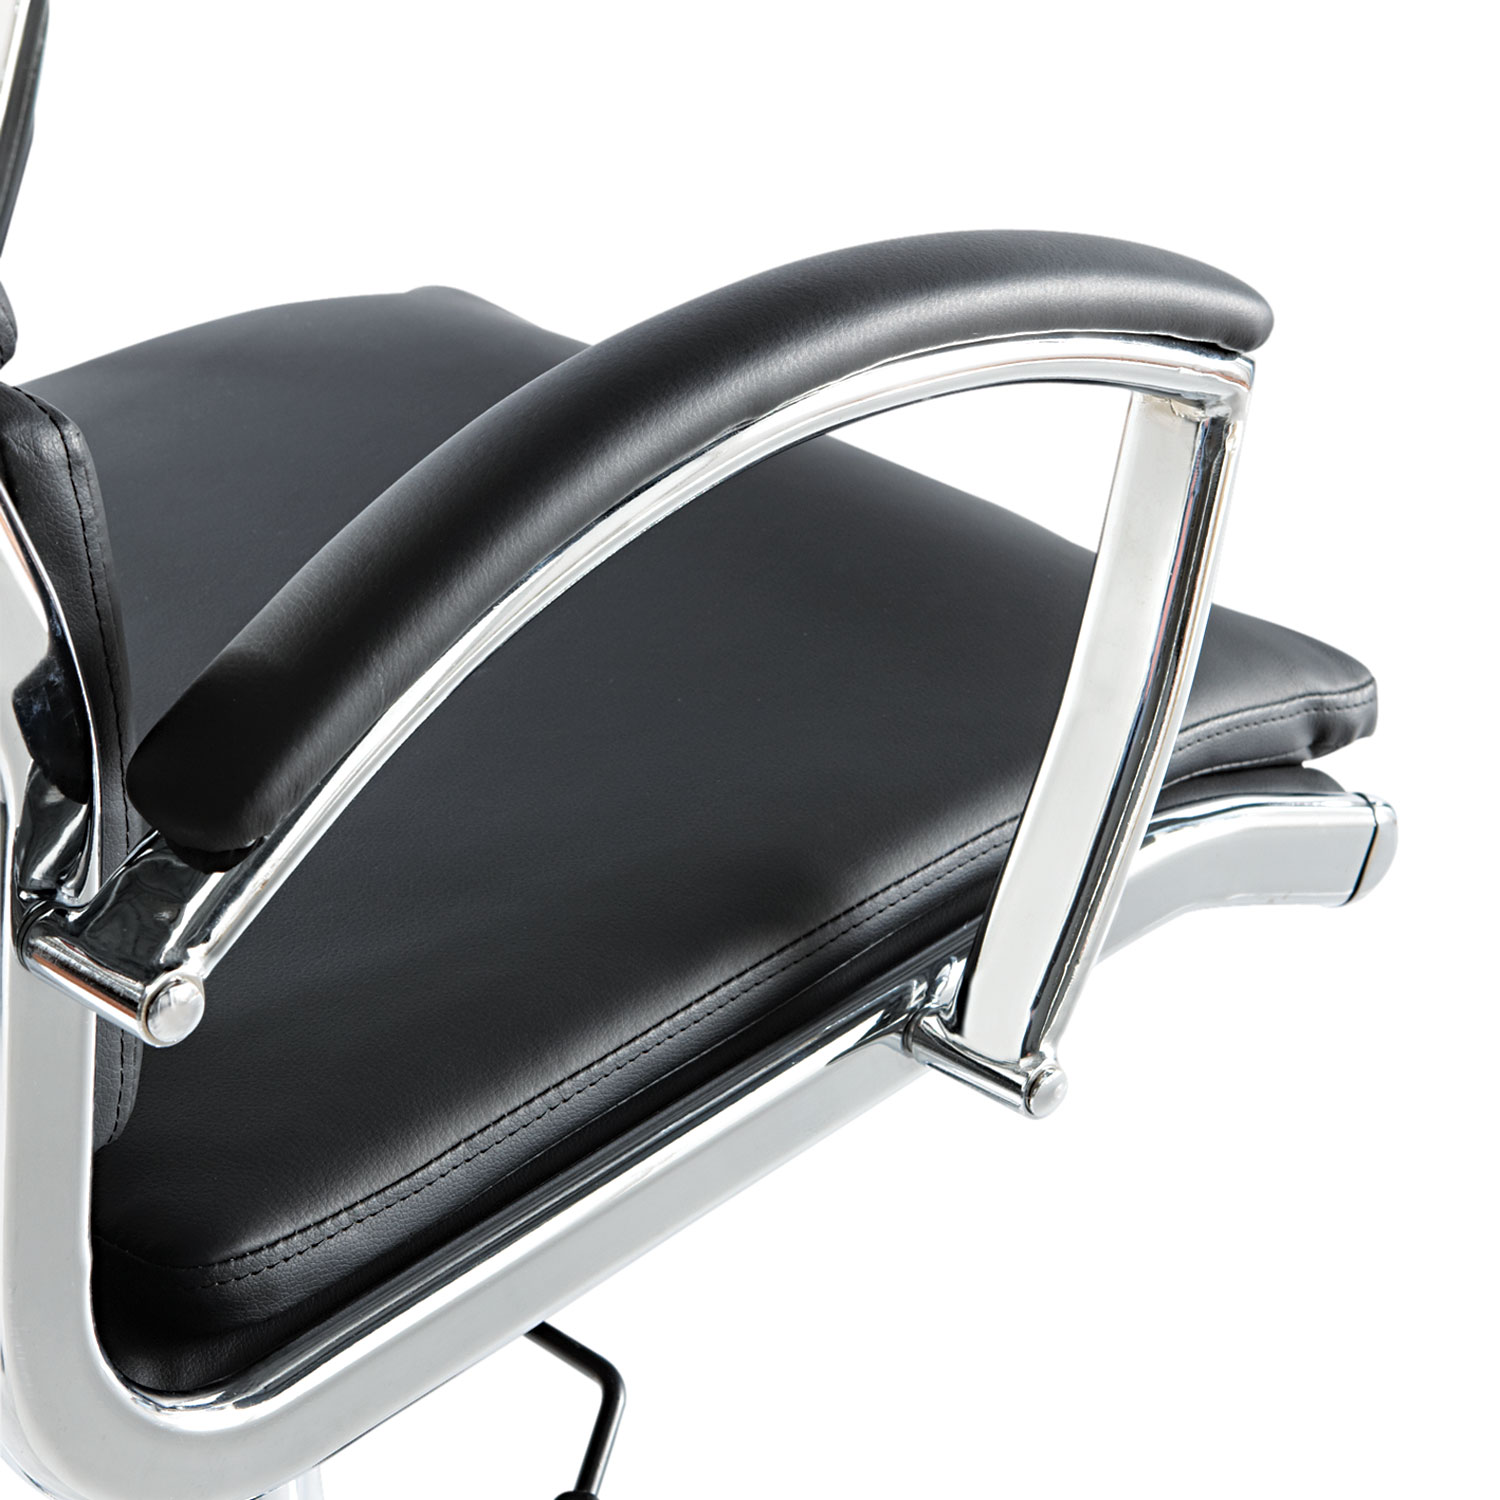 Alera Neratoli High-Back Slim Profile Chair, Faux Leather, 275 lb Cap, 17.32" to 21.25" Seat Height, Black Seat/Back, Chrome - image 2 of 10